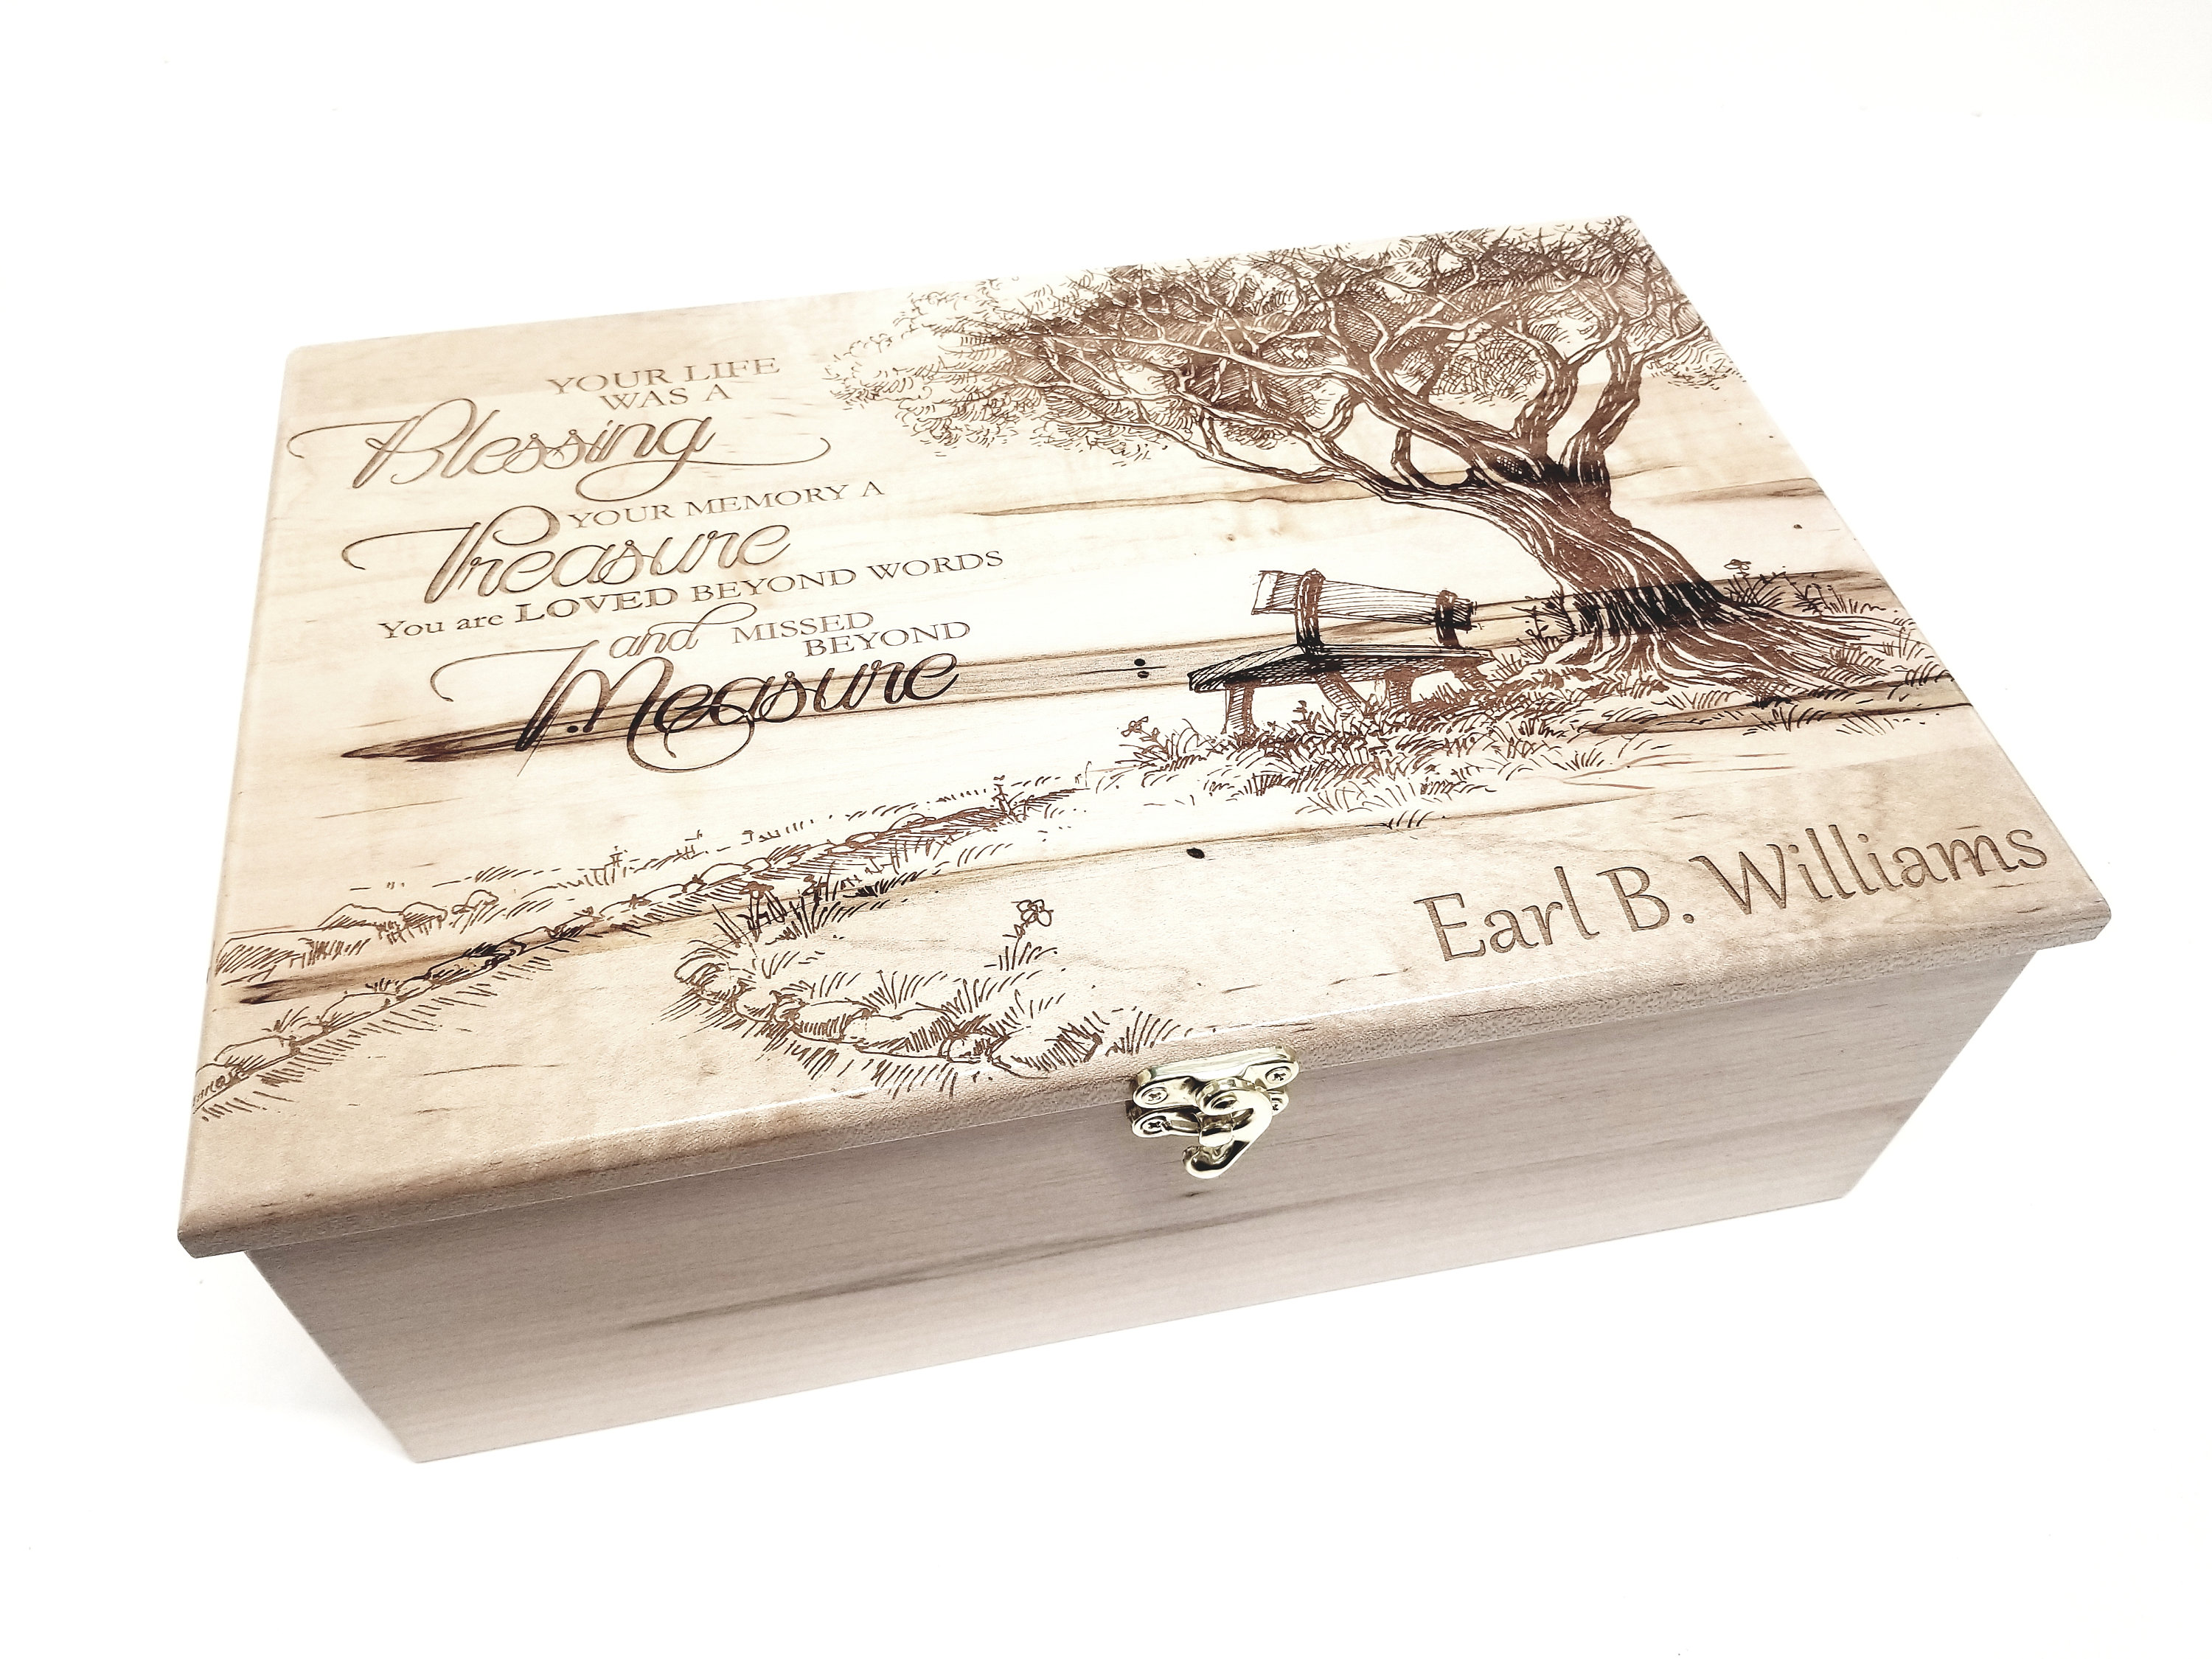 Travel Memory Box, Adventure Archive Box, Personalized Adventures Box,  Custom Memory Box, Wood Travel Souvenir Box, Valentine's Gift for Him 